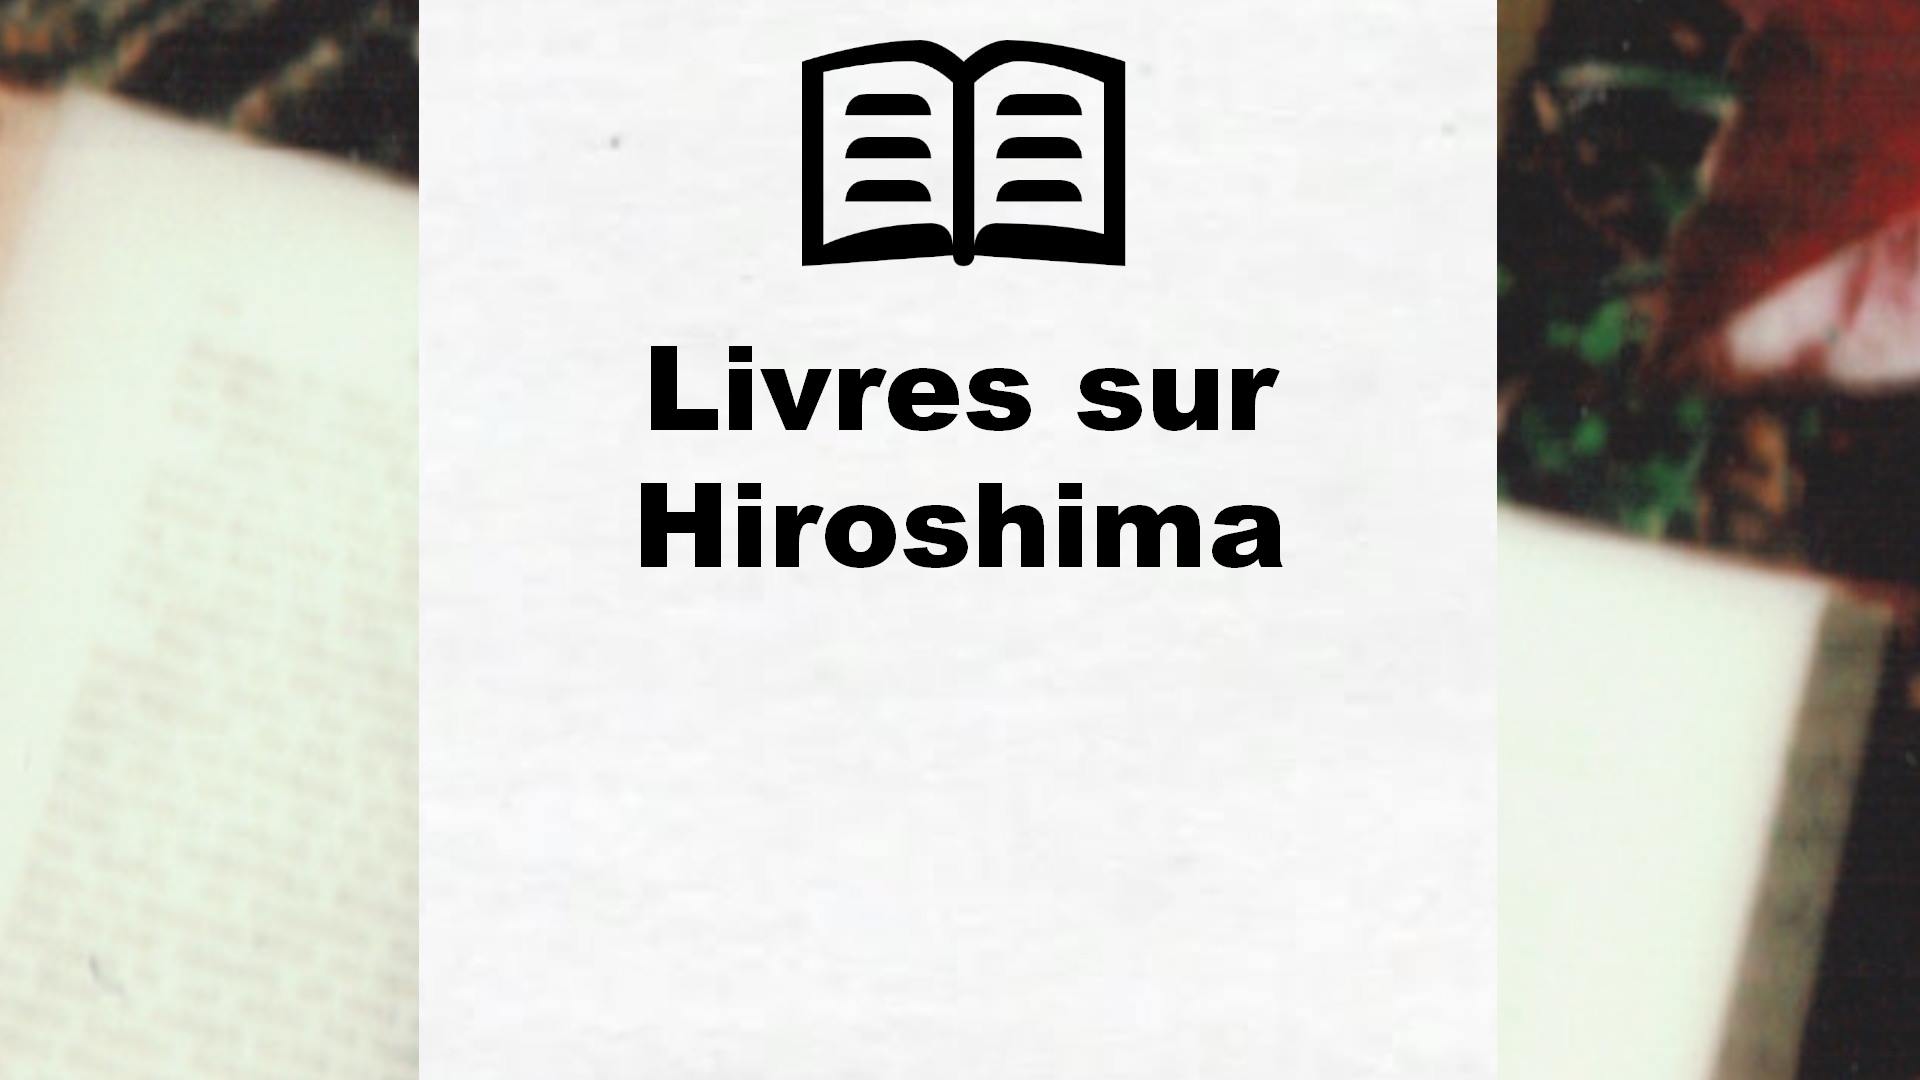 Livres sur Hiroshima